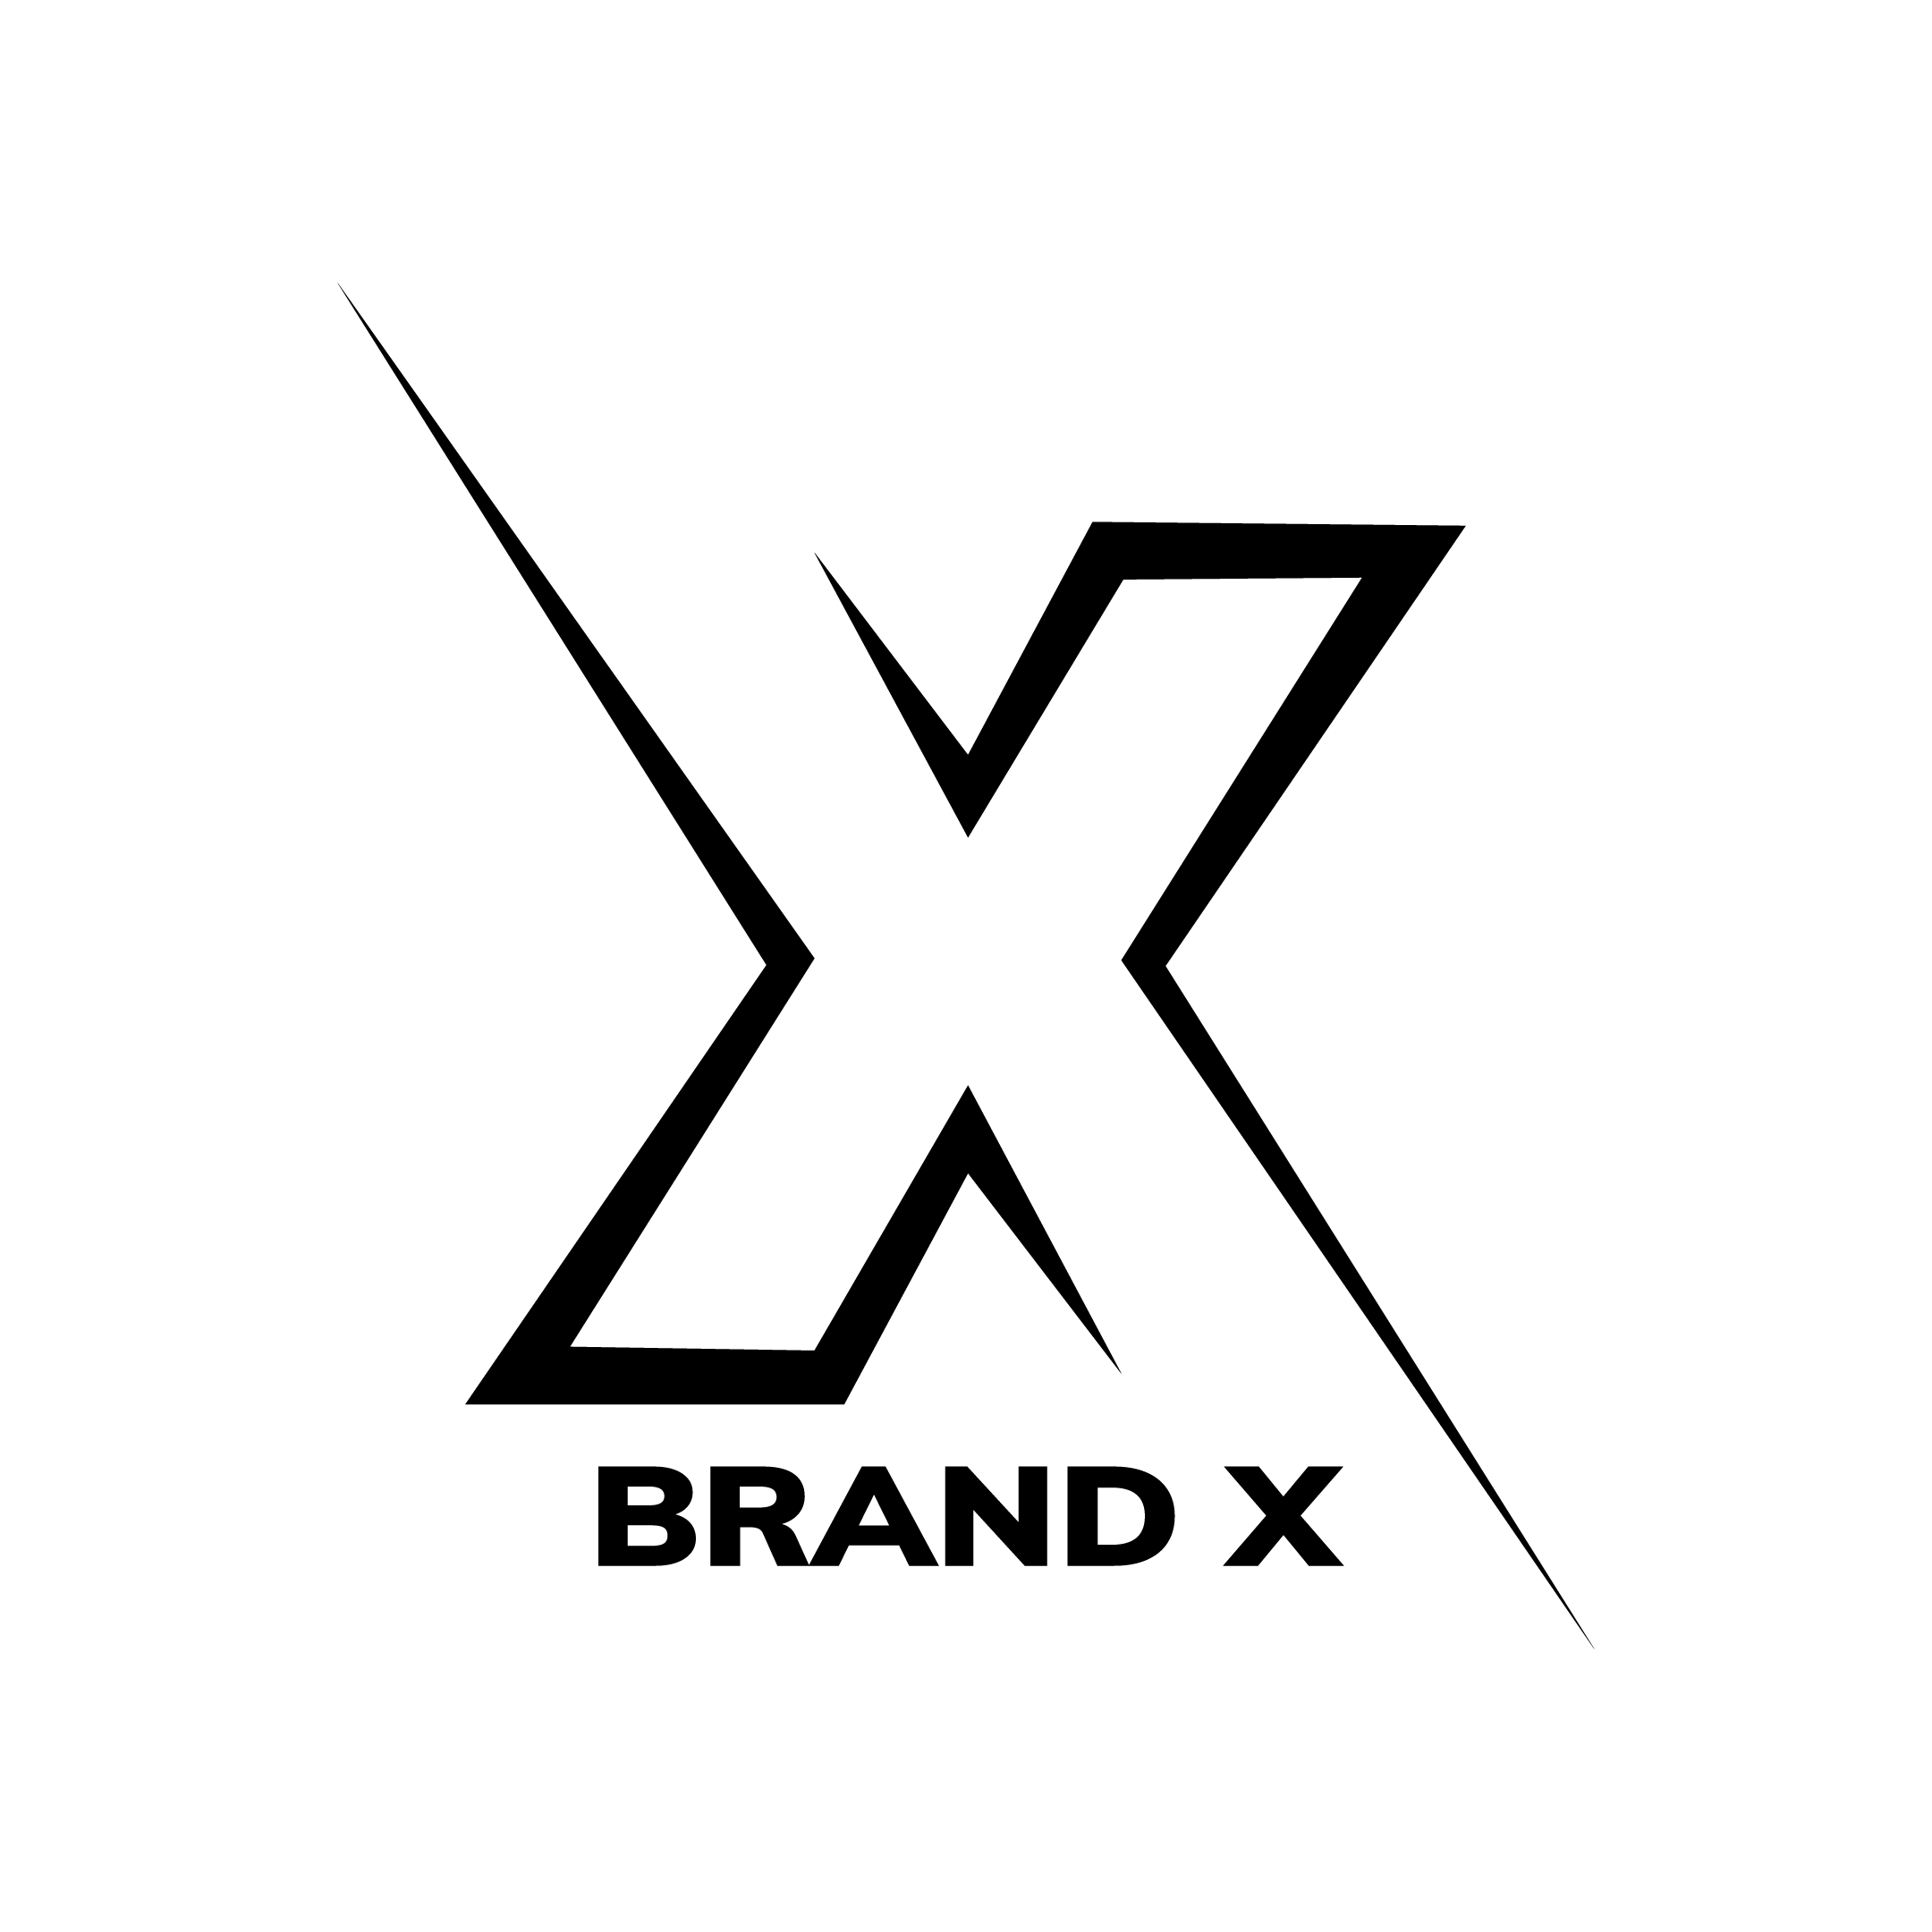 Brand x